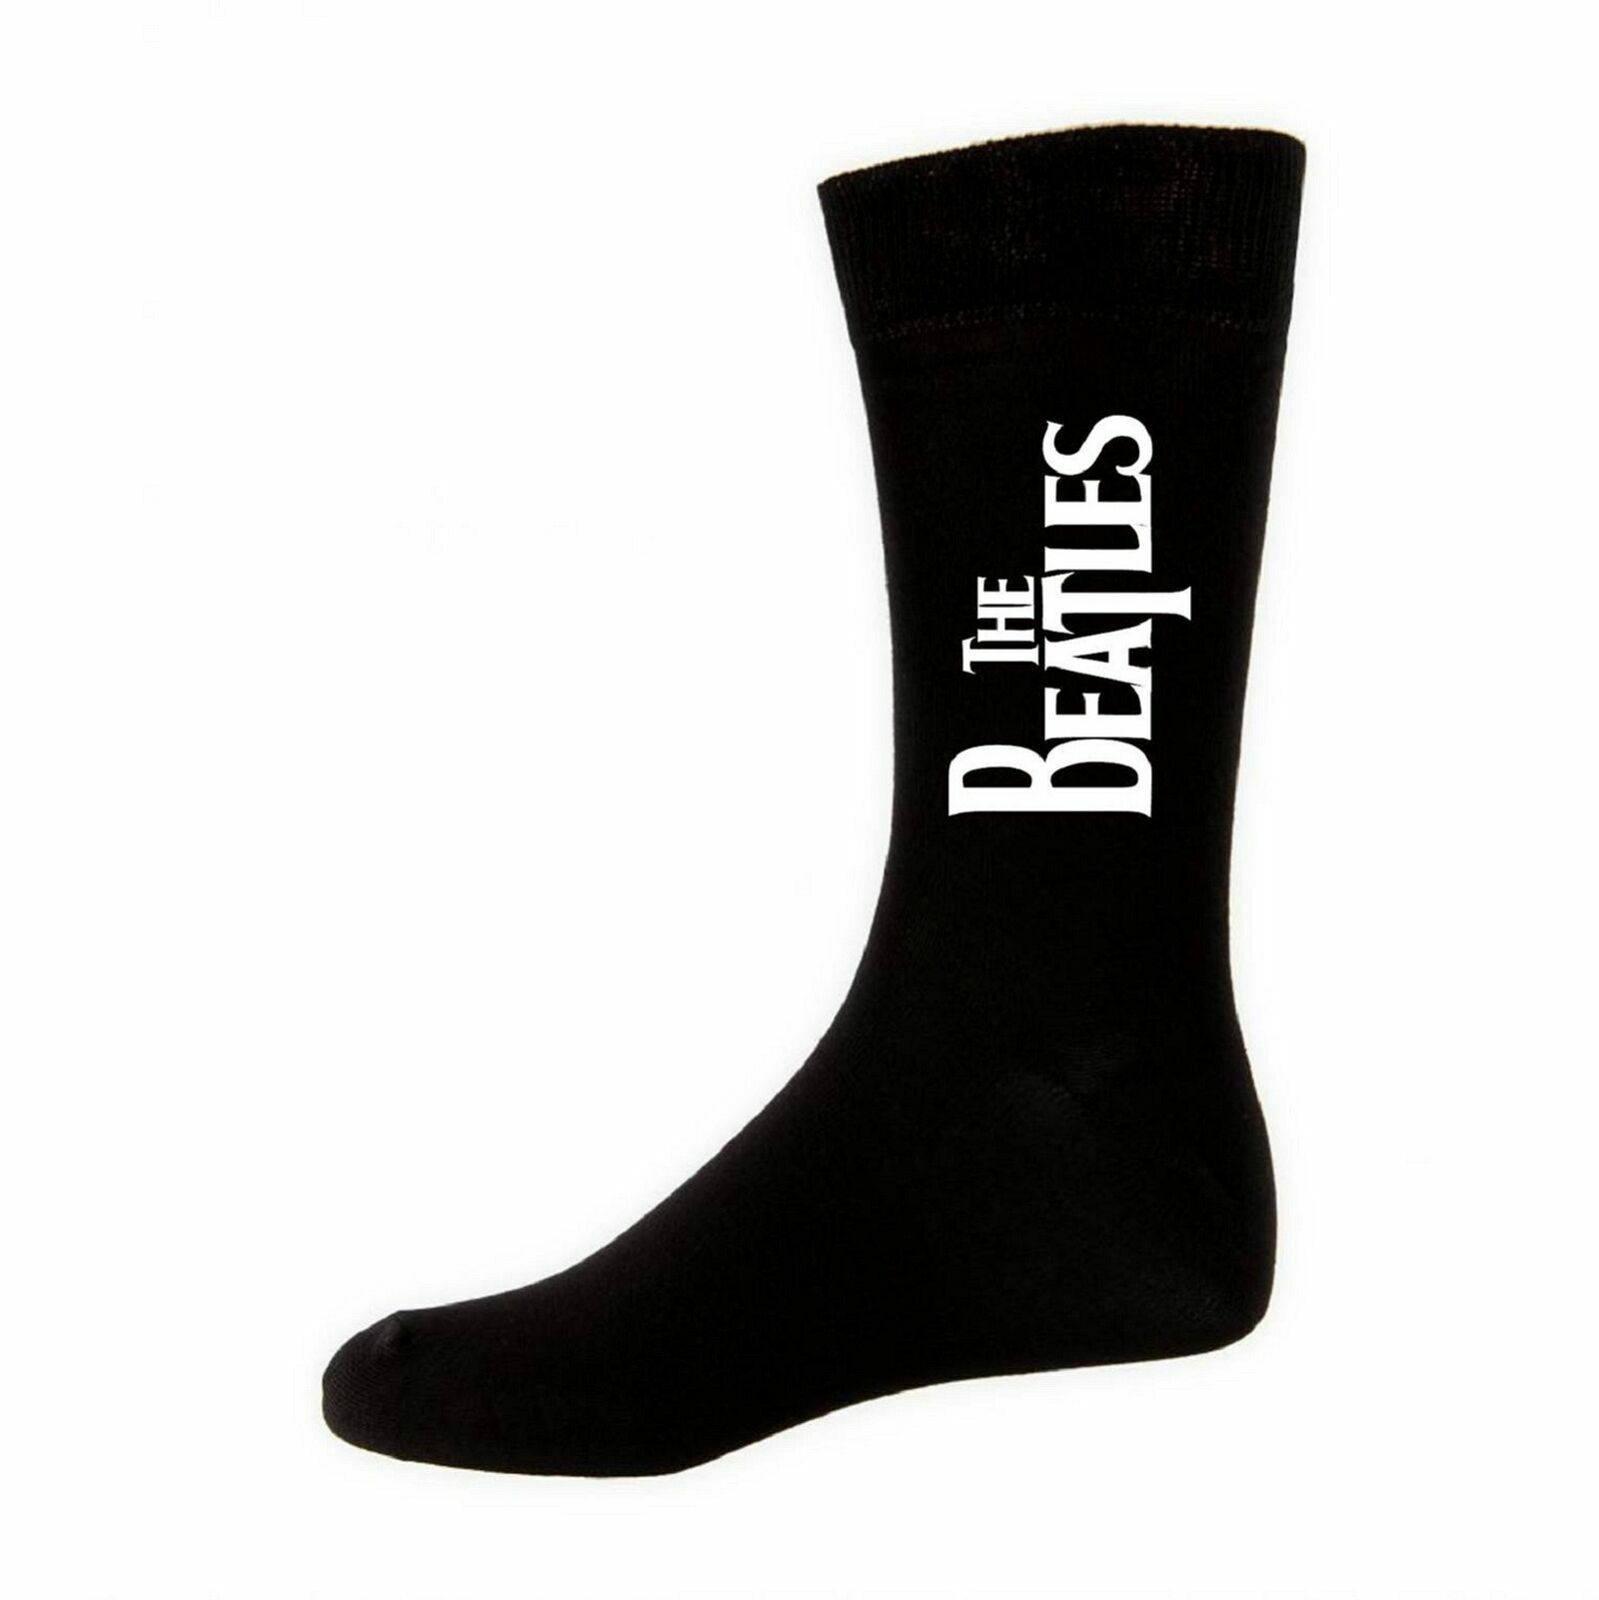 The Beatles socks - Official licensed merchandise - UK company